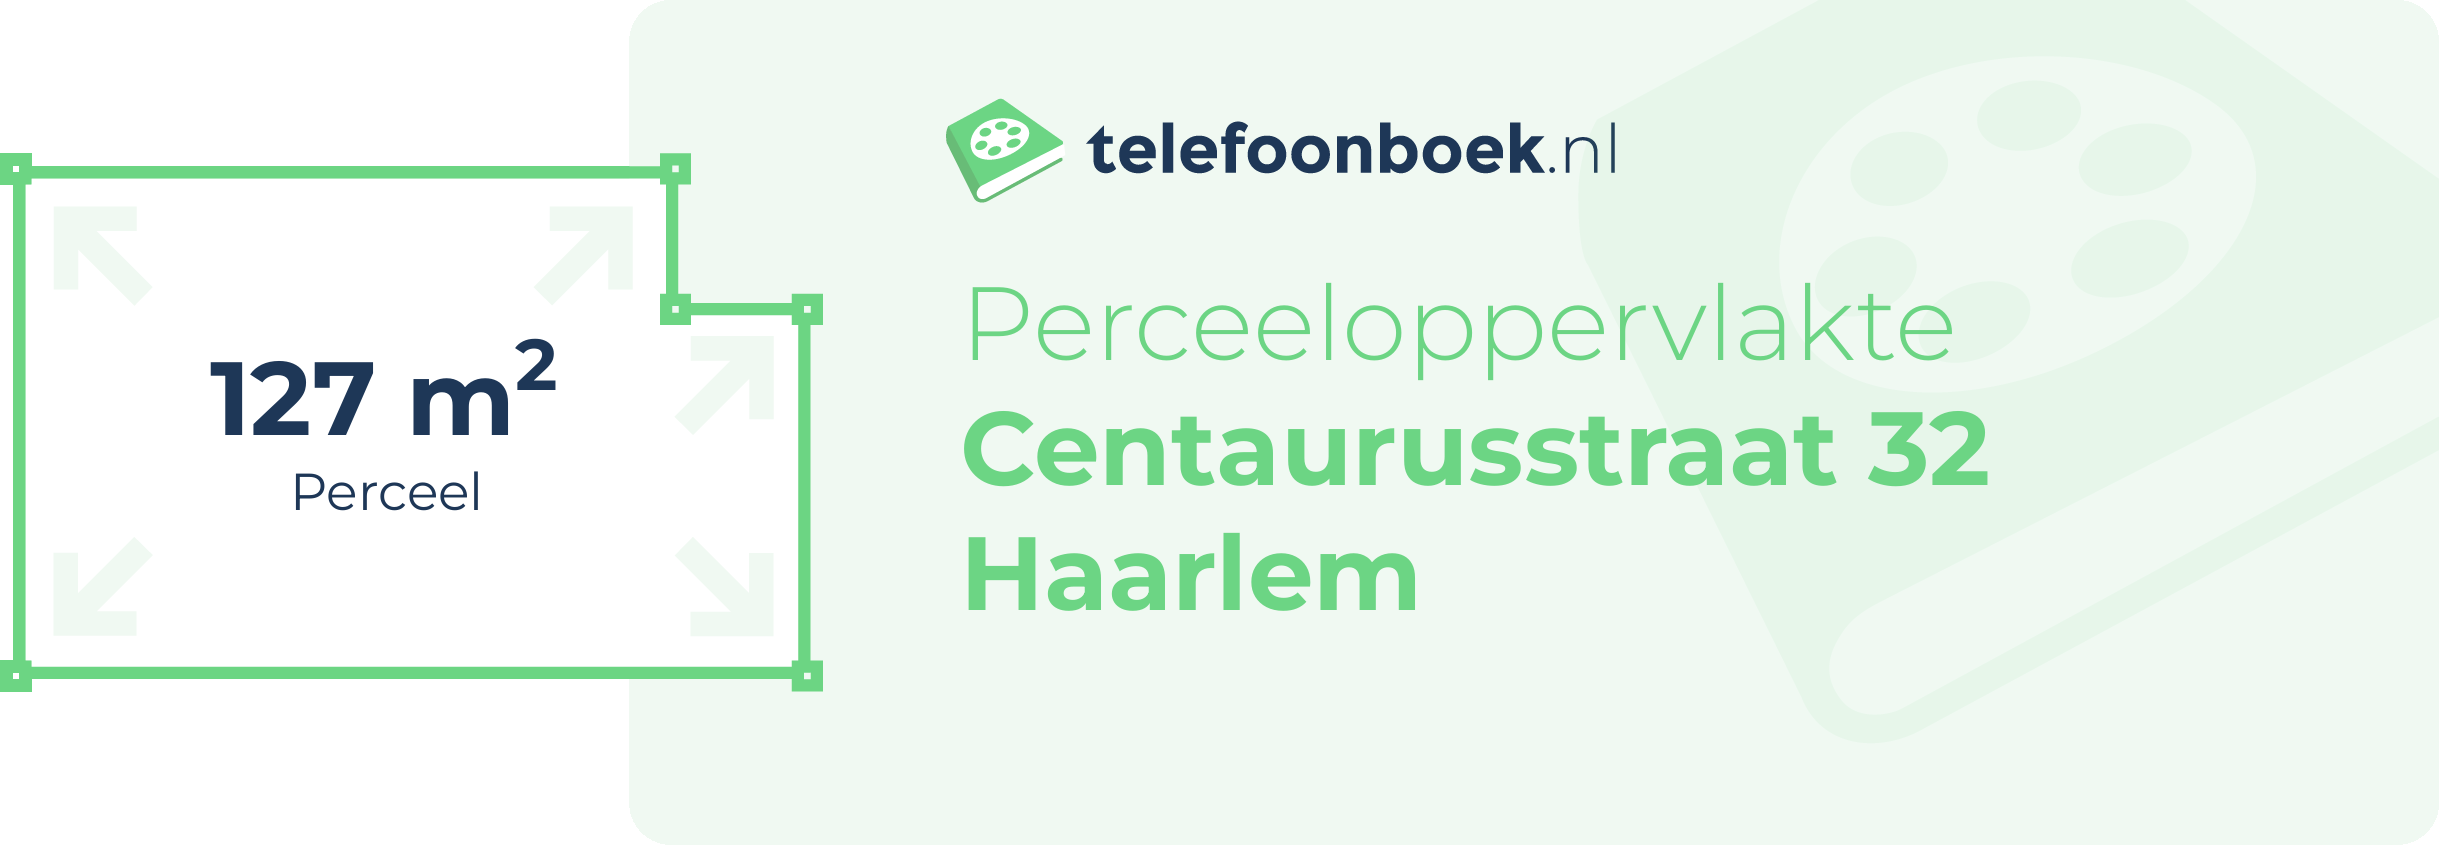 Perceeloppervlakte Centaurusstraat 32 Haarlem